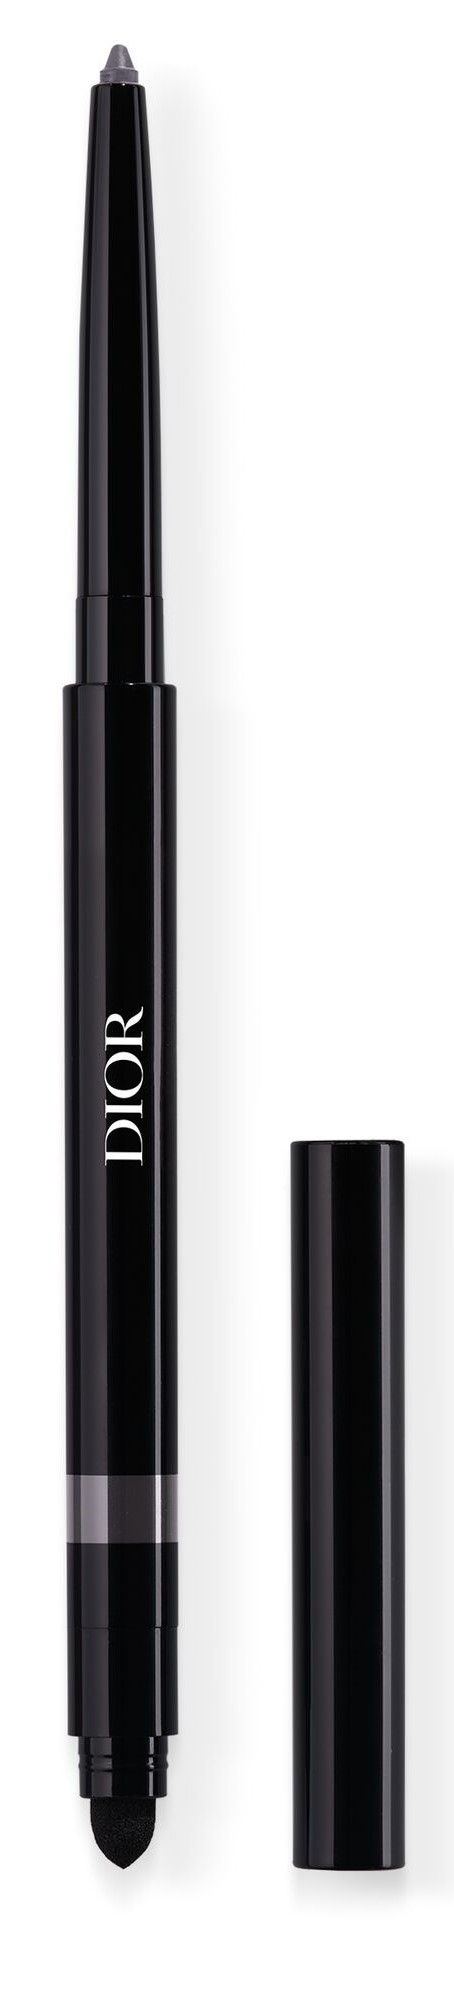 dior-diorshow-stylo-oogpotlood-03-gr-1